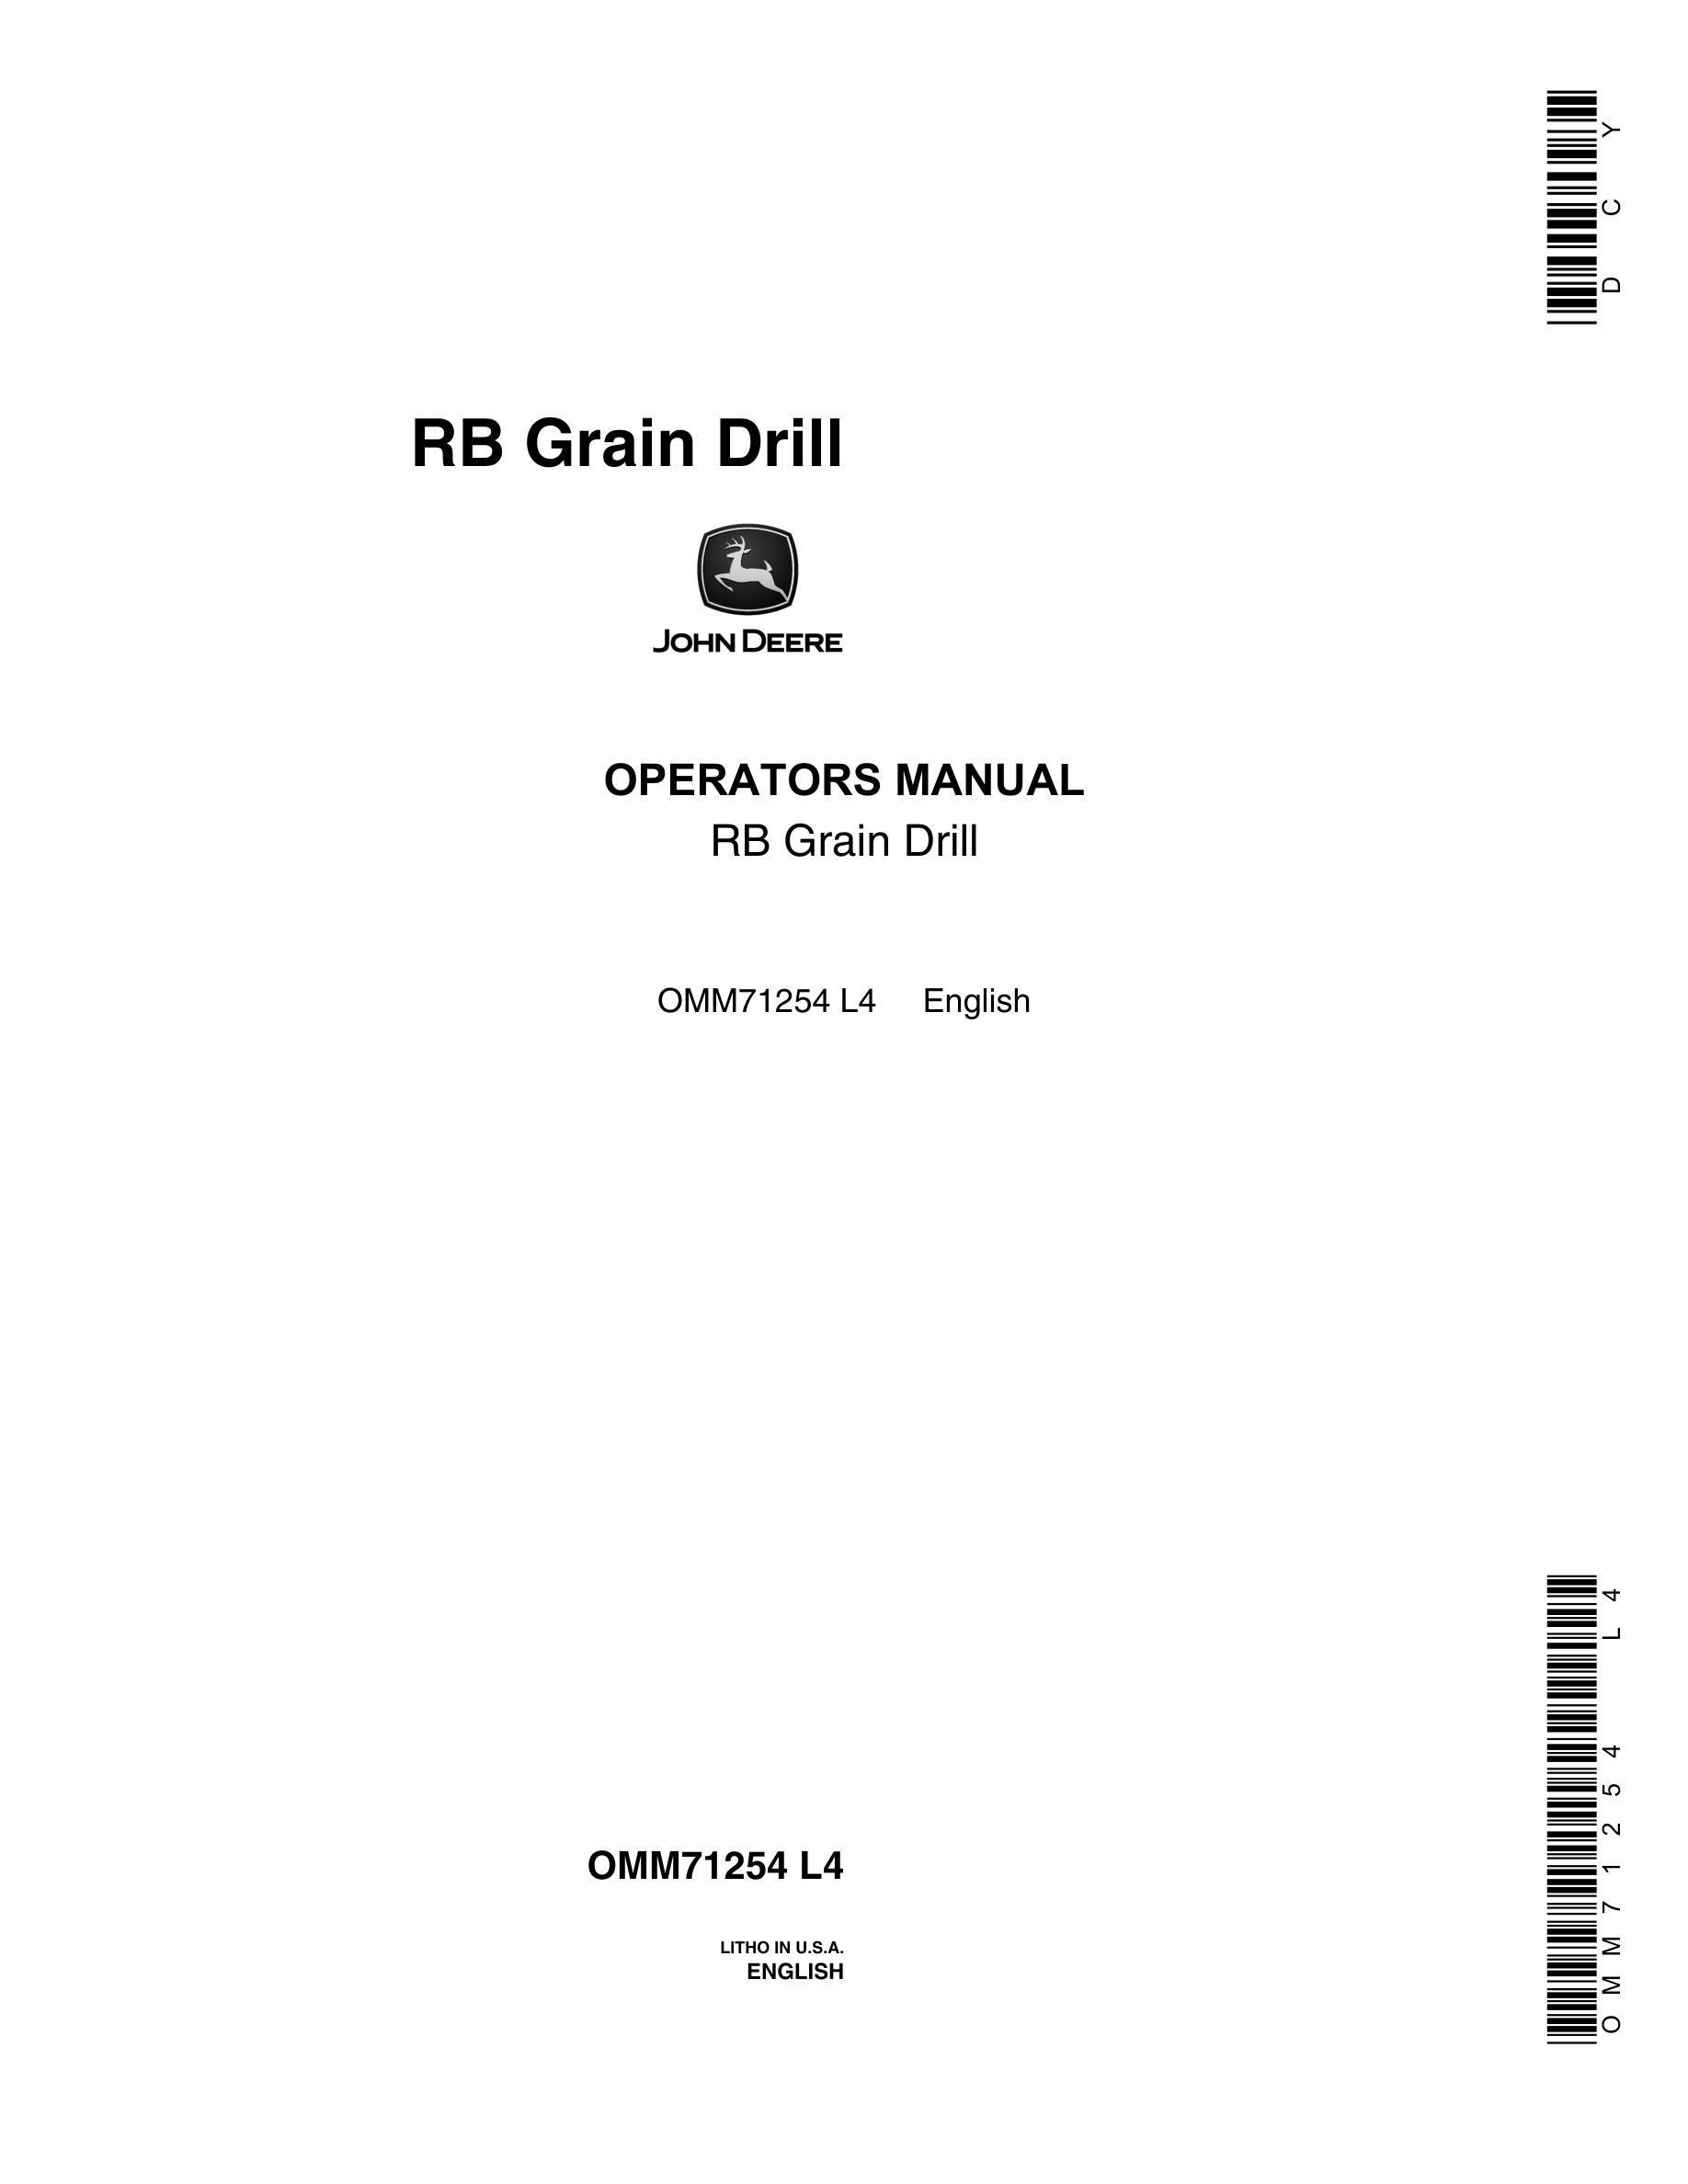 John Deere RB Grain Drill Operator Manual OMM71254-1